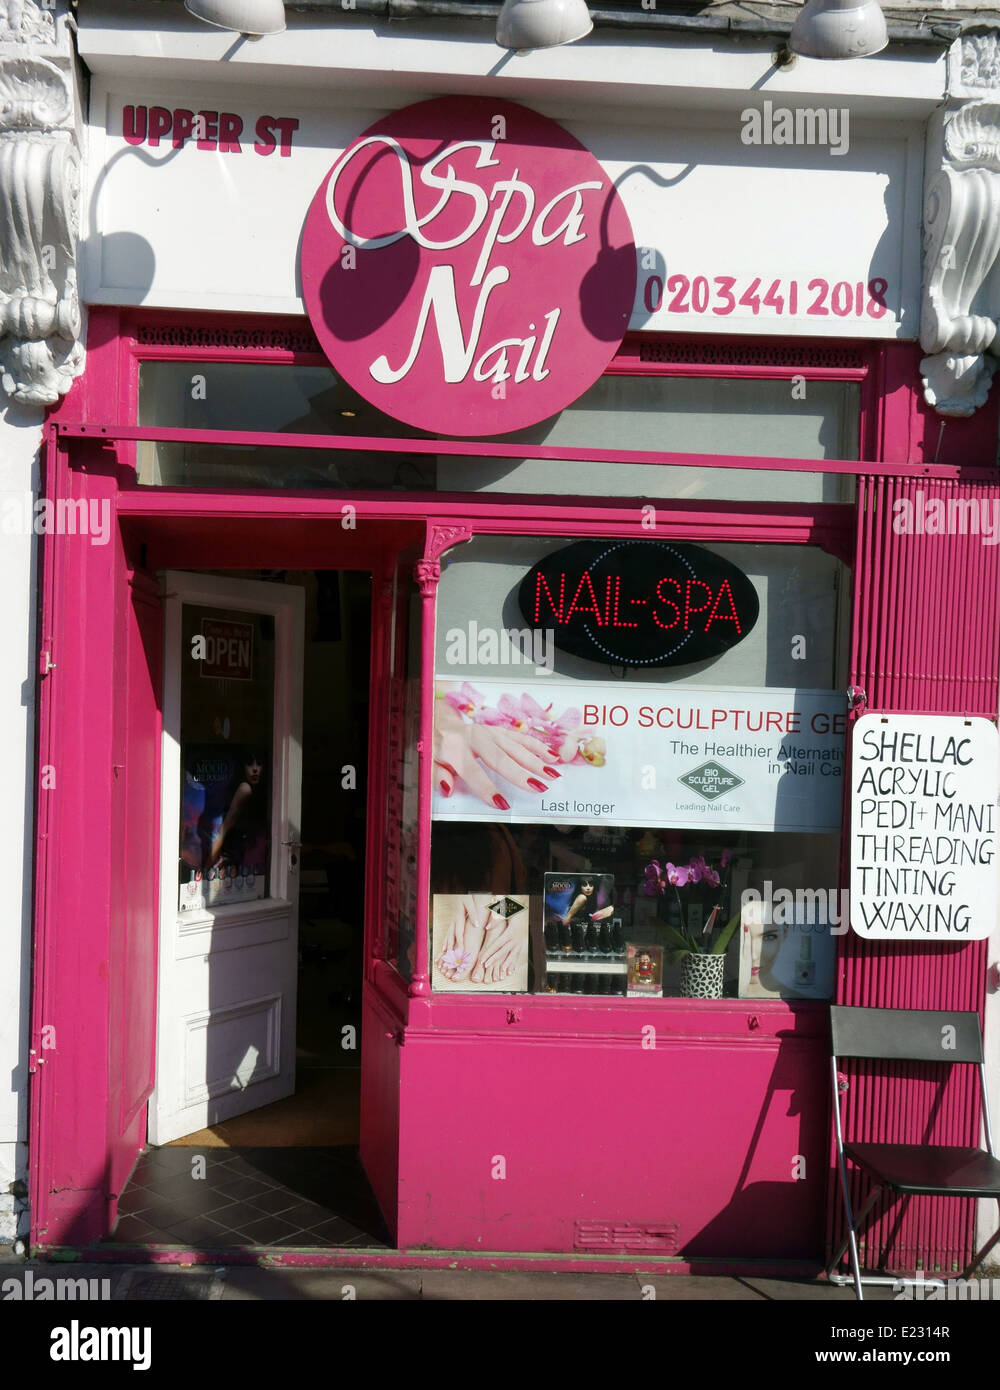 Nail bar in Islington, London Stock Photo